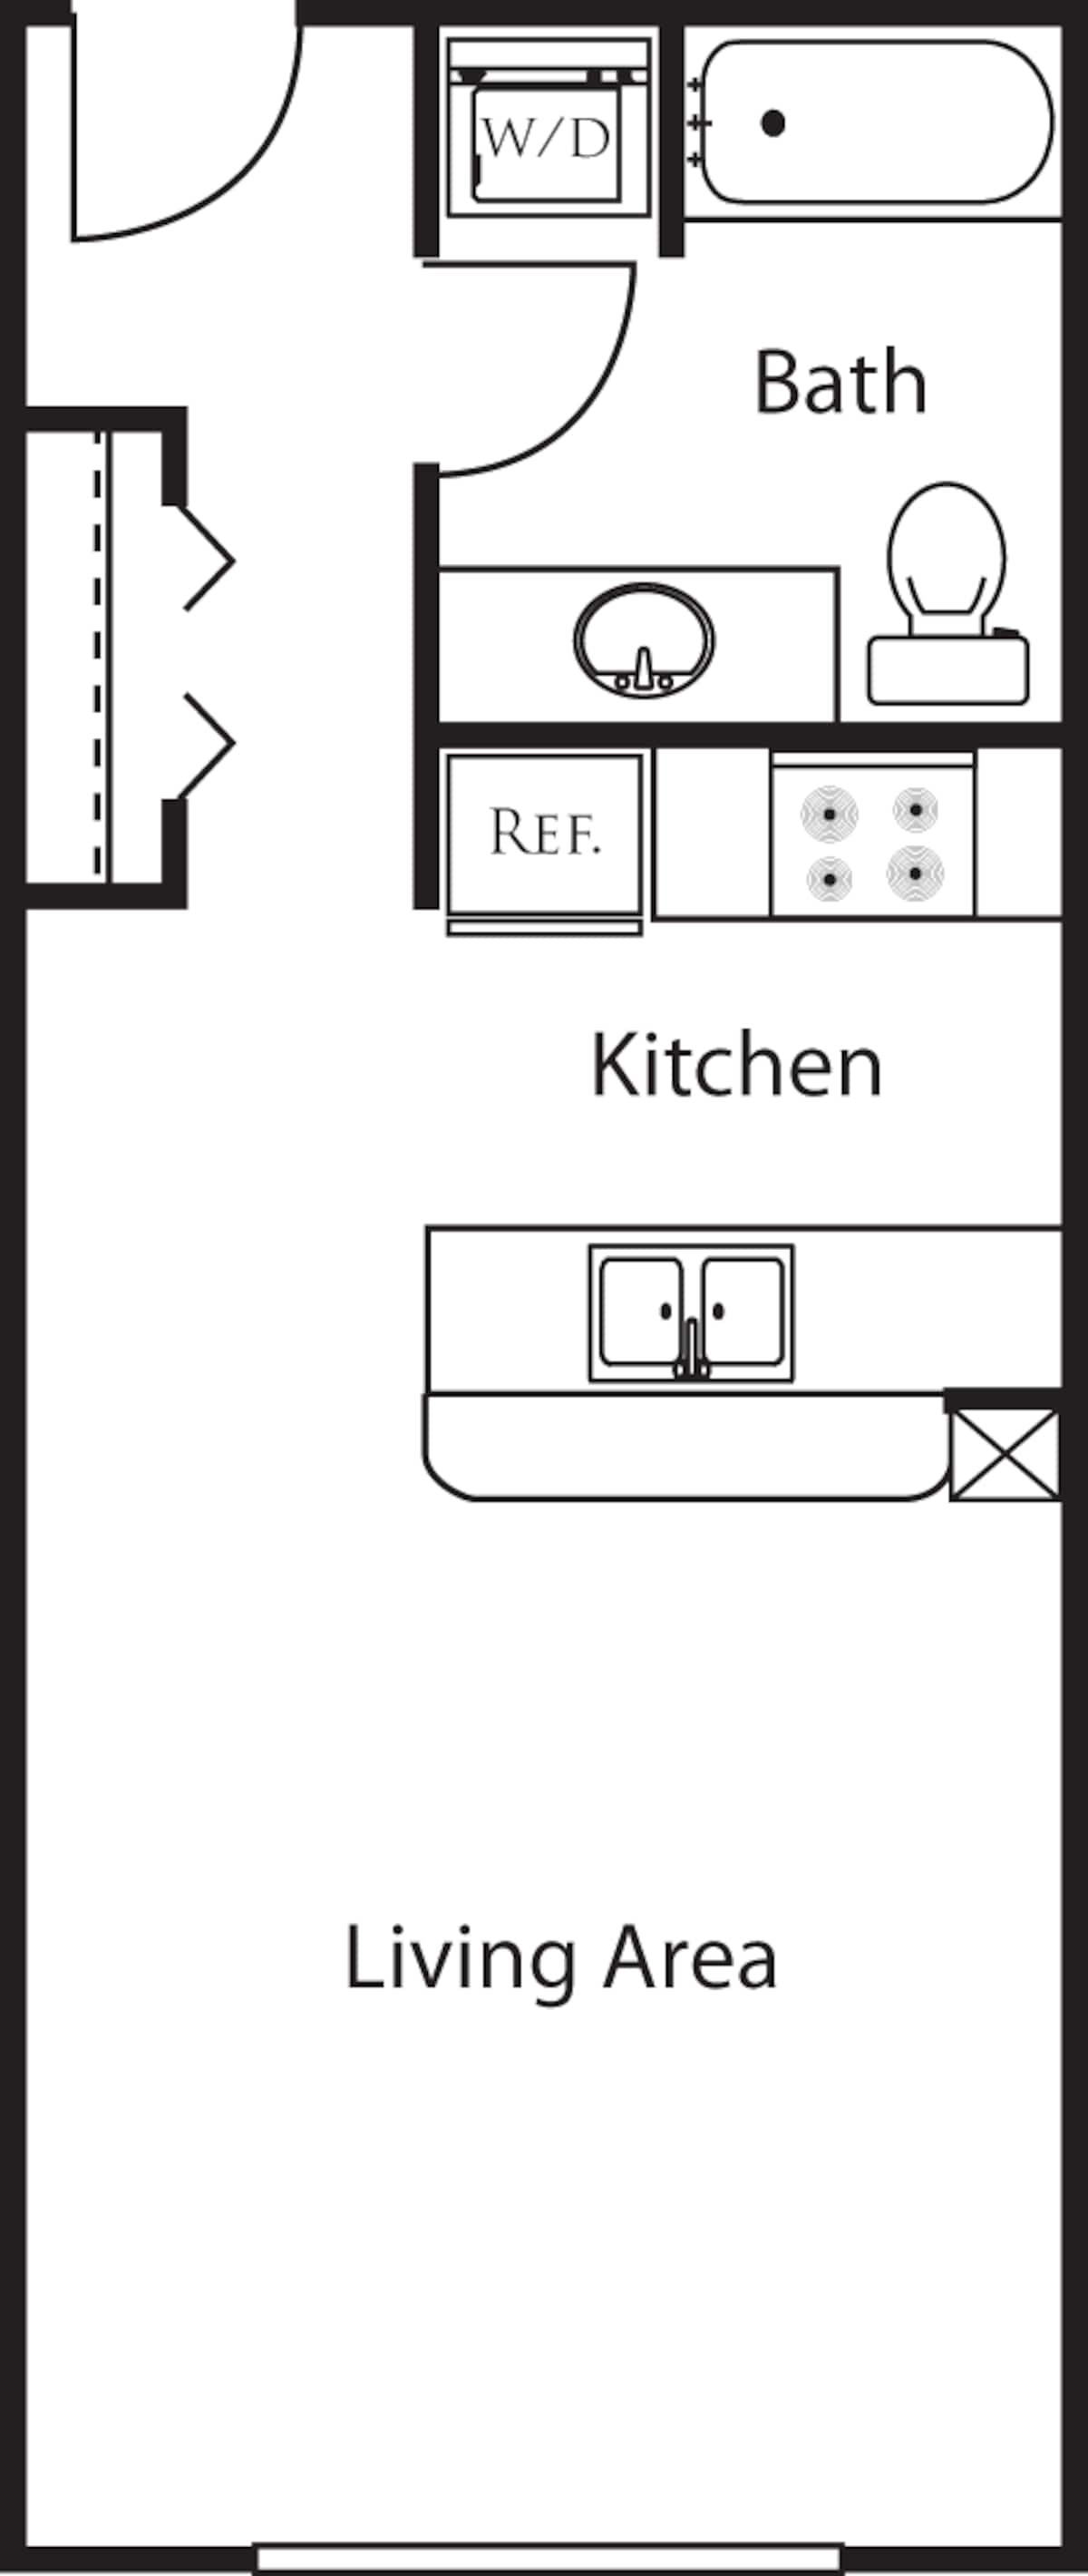 Floorplan diagram for Studio Y, showing Studio